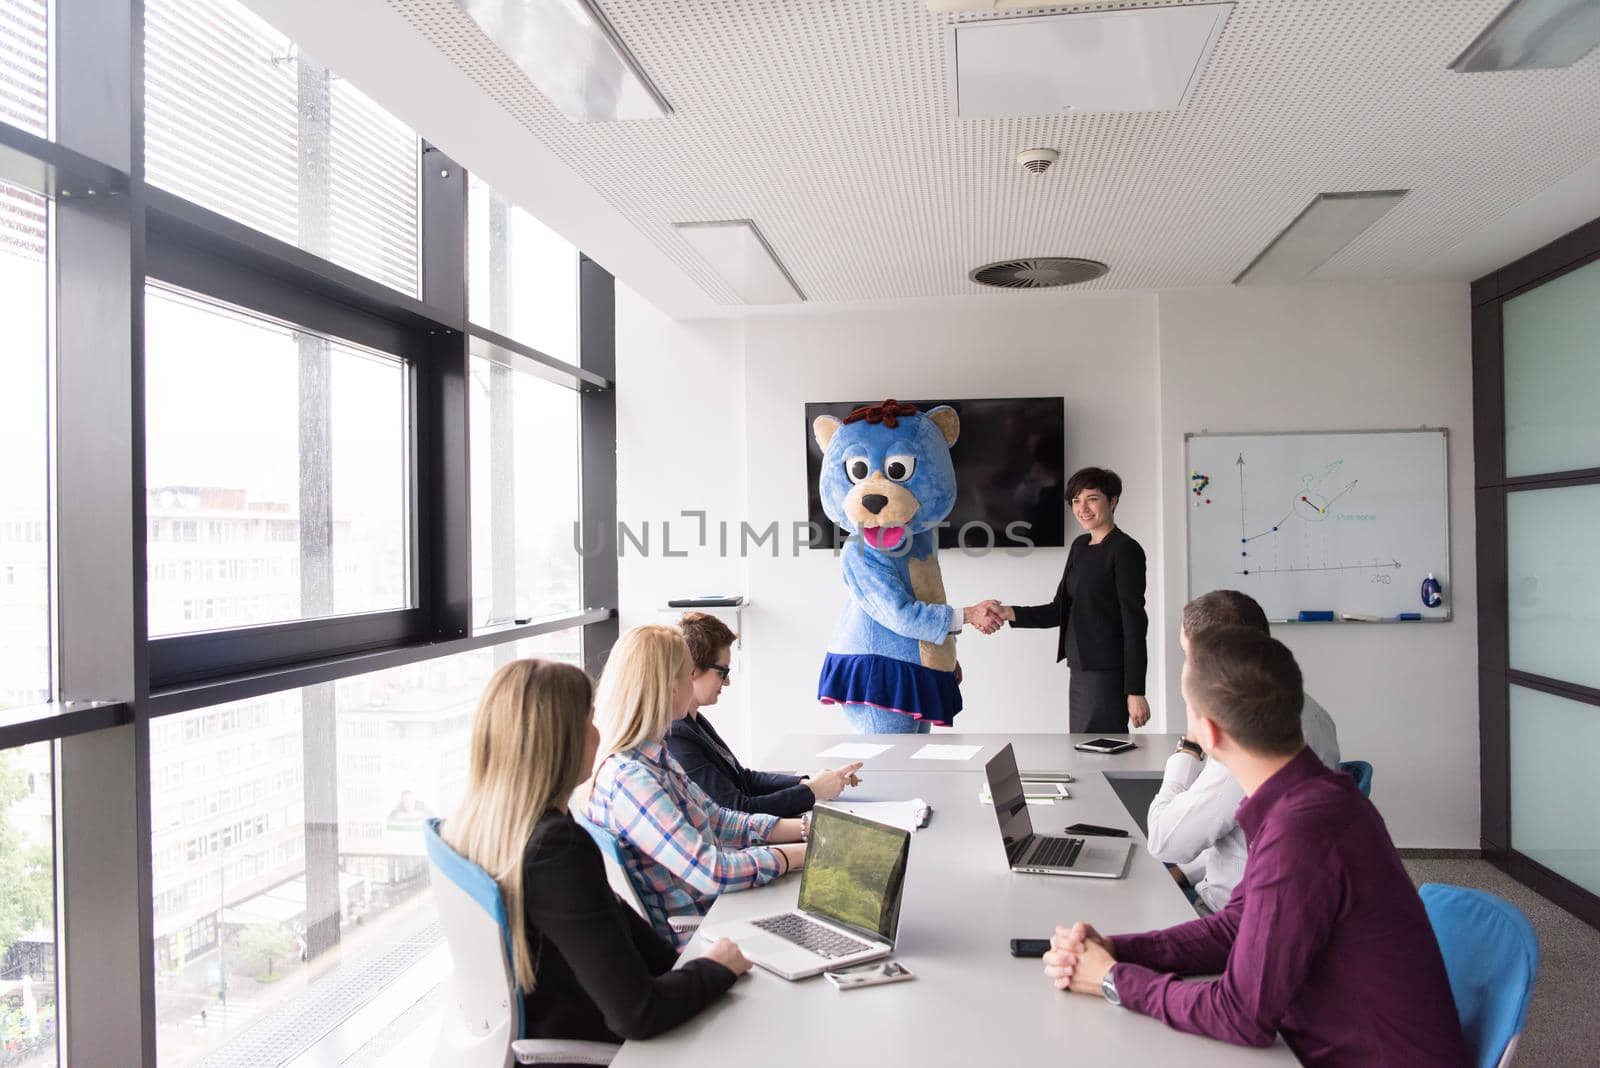 boss dresed as bear having fun with business people in trendy office by dotshock